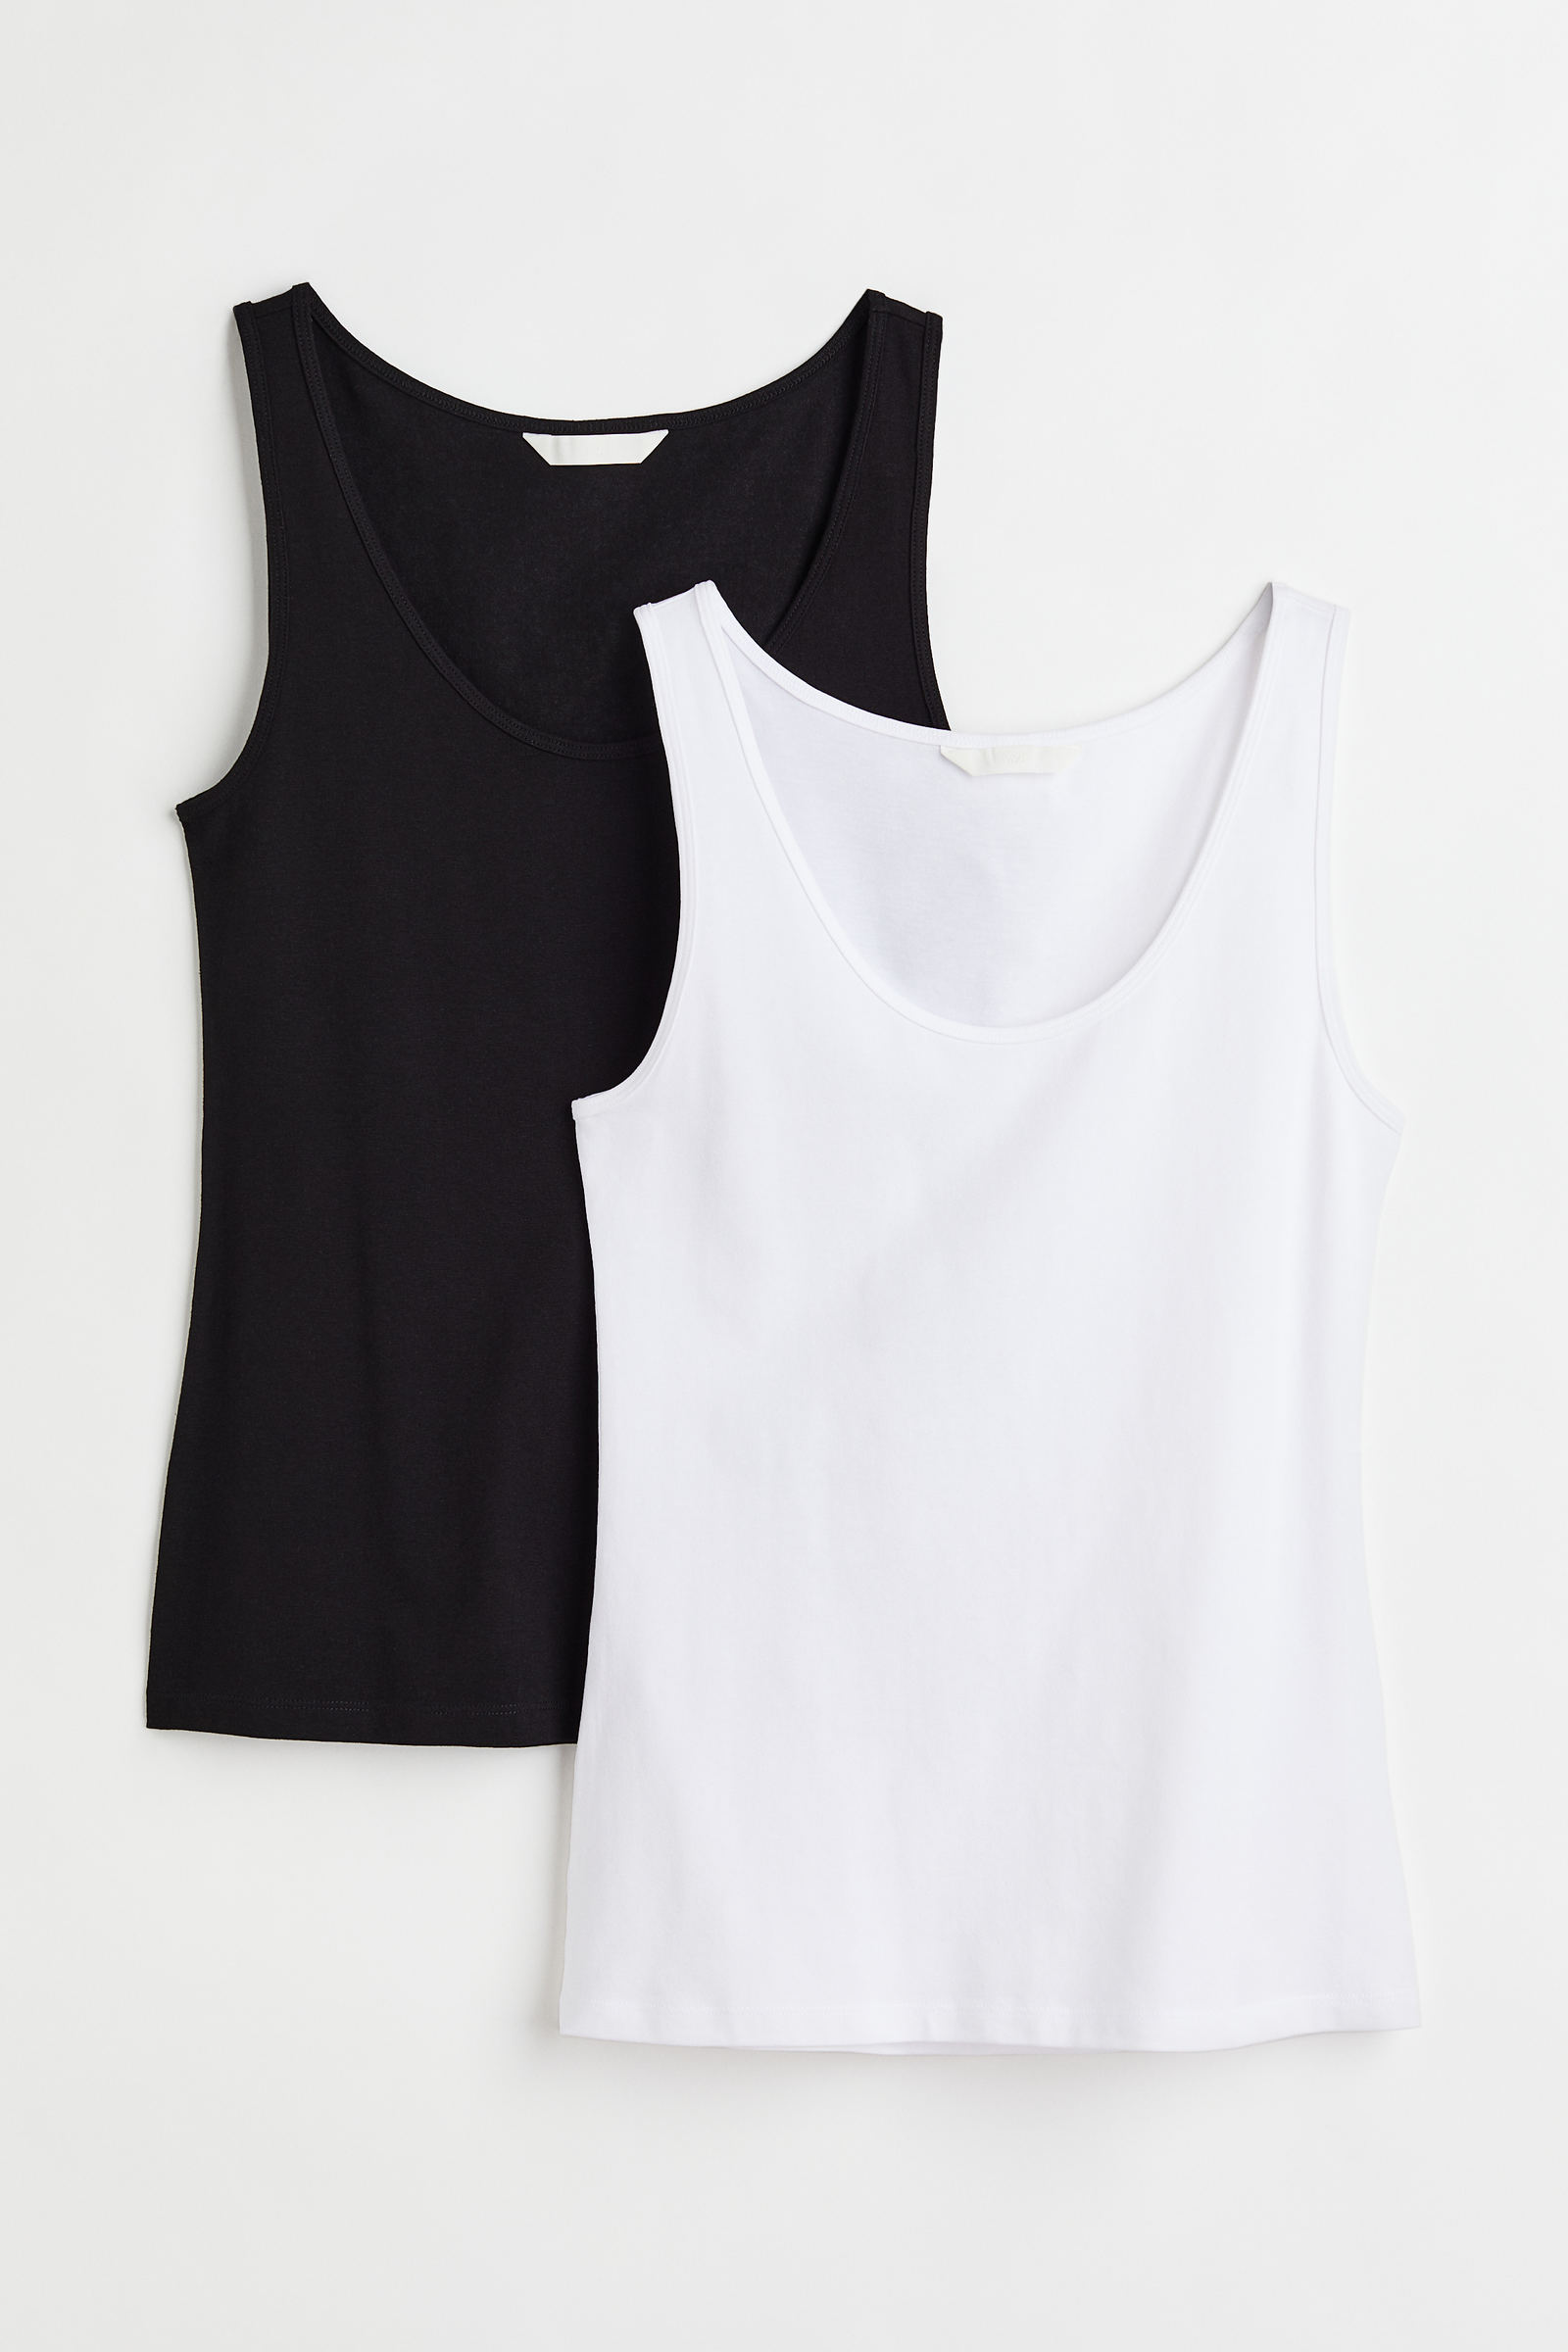 Camisetas y tops | Mujer H&M CO